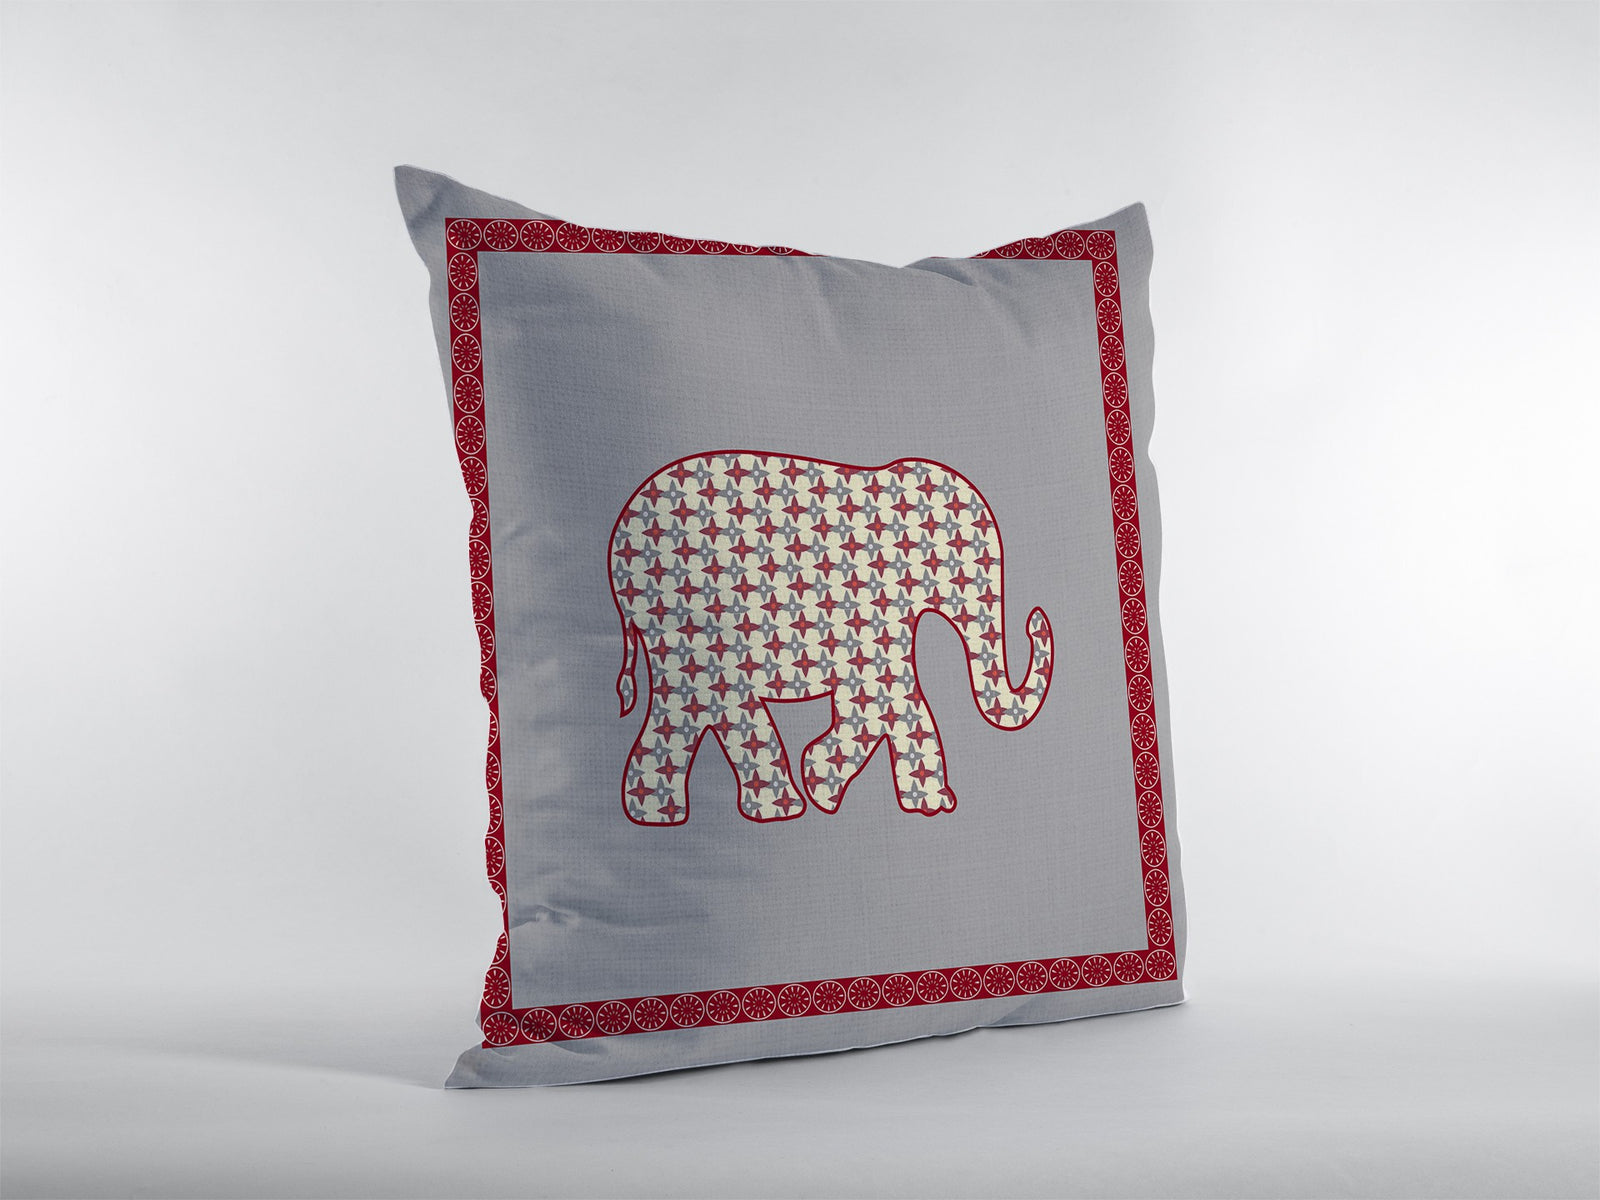 18” Red Gray Elephant Indoor Outdoor Zippered Throw Pillow